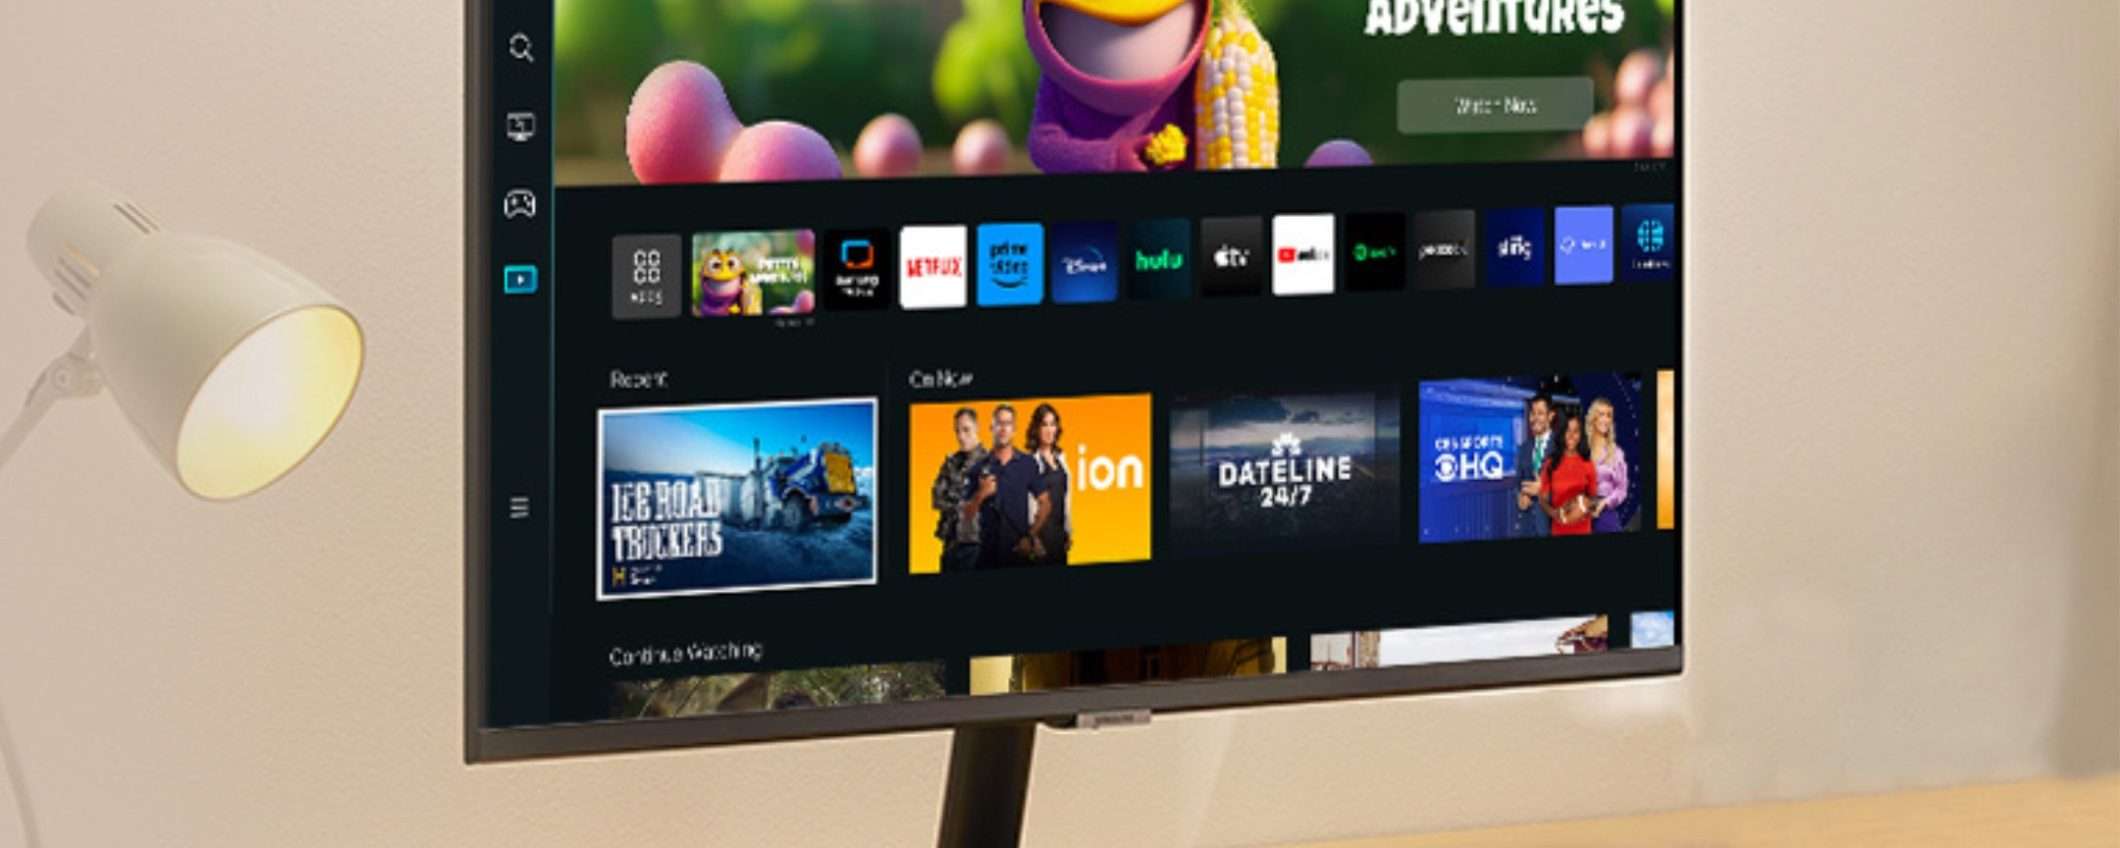 Samsung Smart Monitor M5 in offerta a 179€: Netflix e tantissime funzioni intelligenti